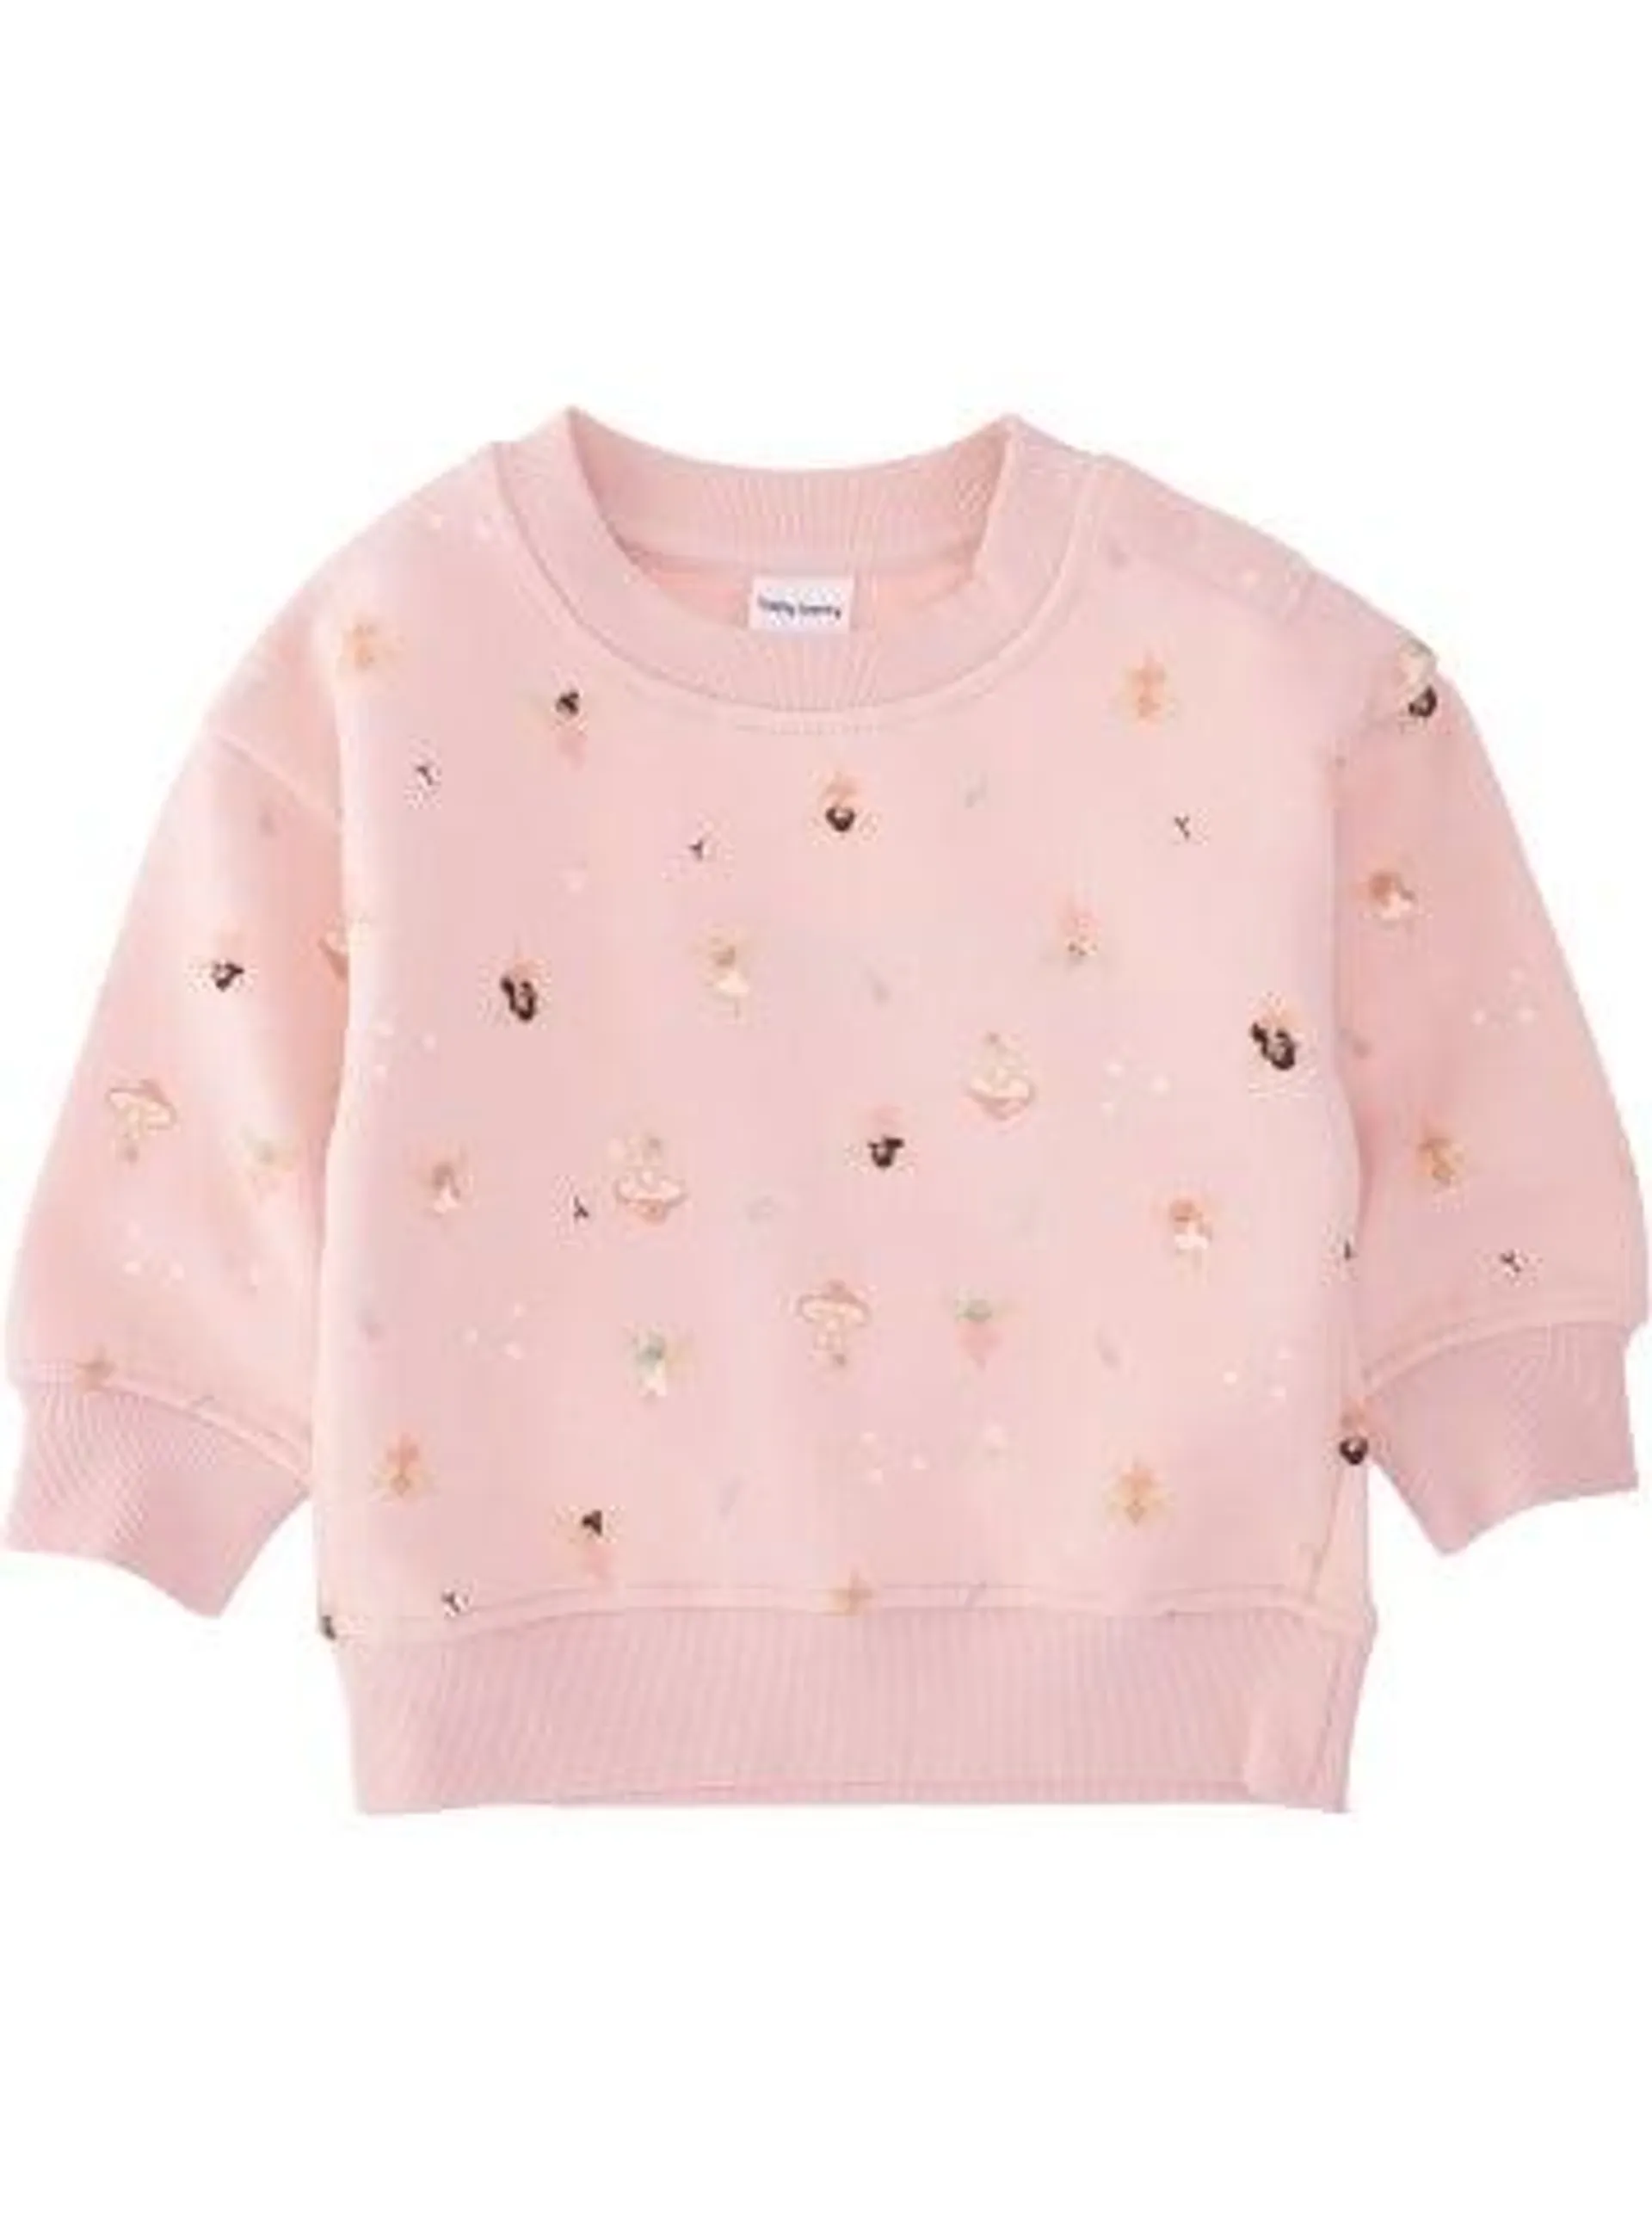 Babies' All Over Print Sweatshirt in Fairies